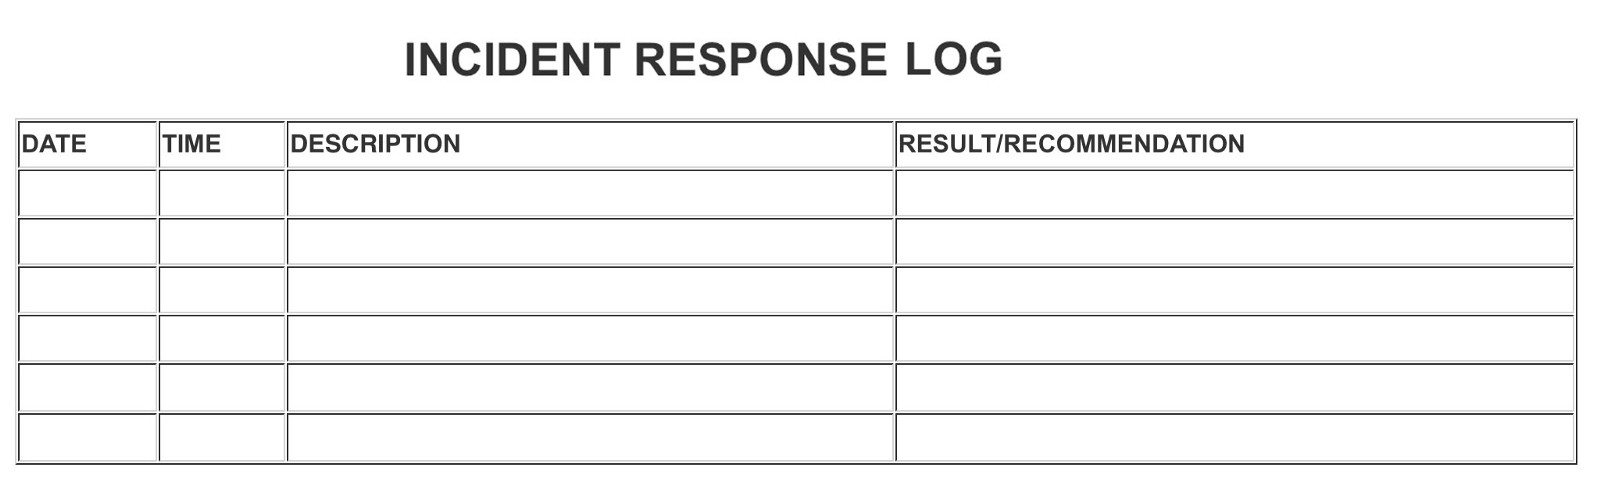 Incident response log. Columns: date, time, description, result/recommendation